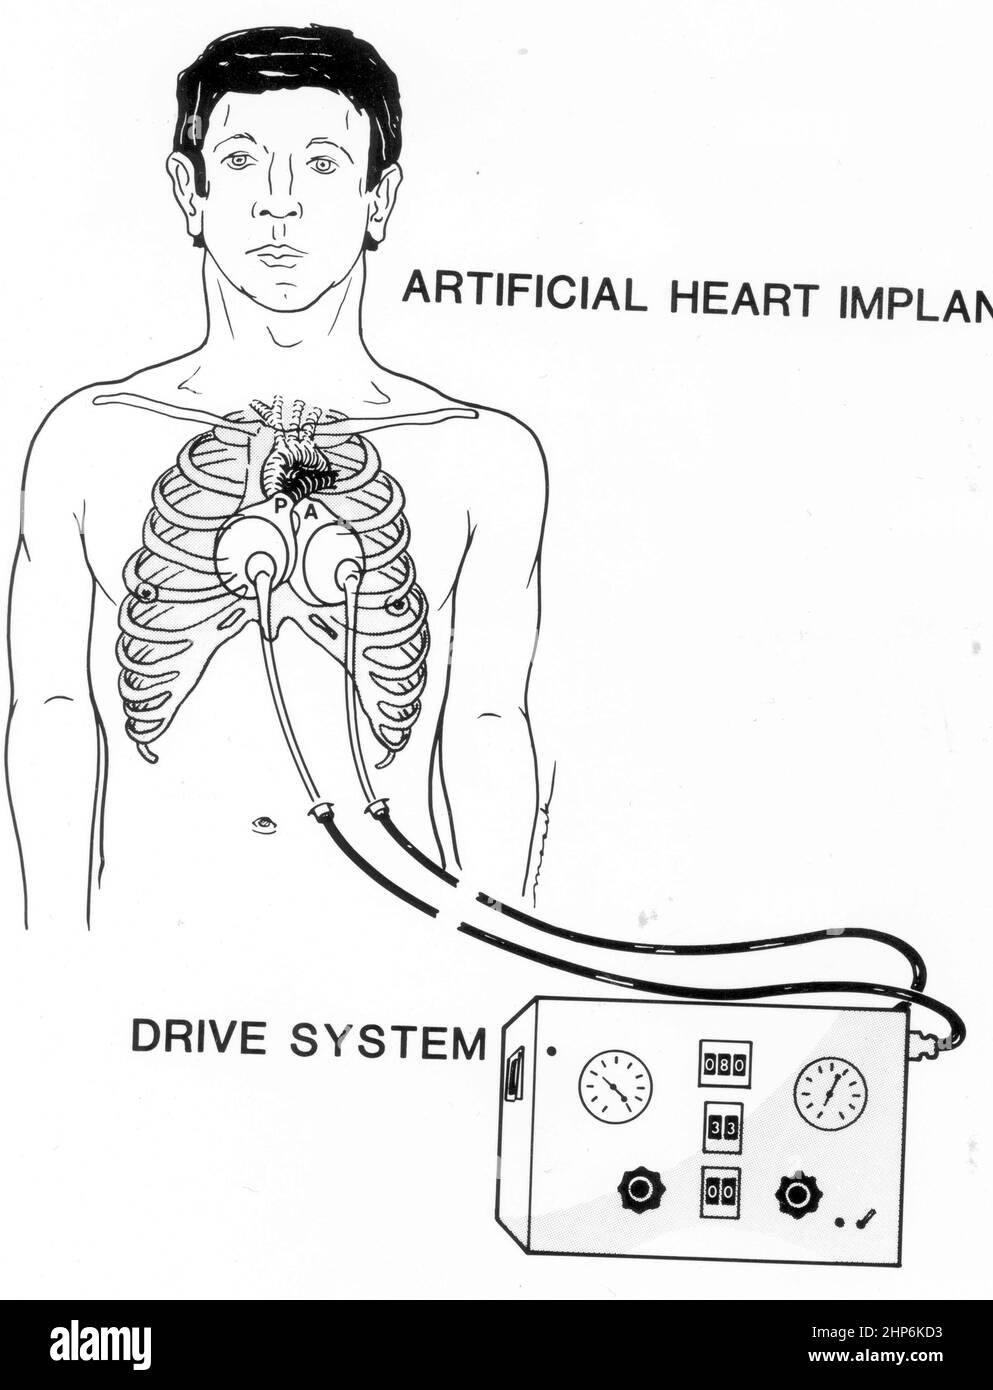 Dr. Robert Jarvik, inventor of the artificial heart Jarvik-7